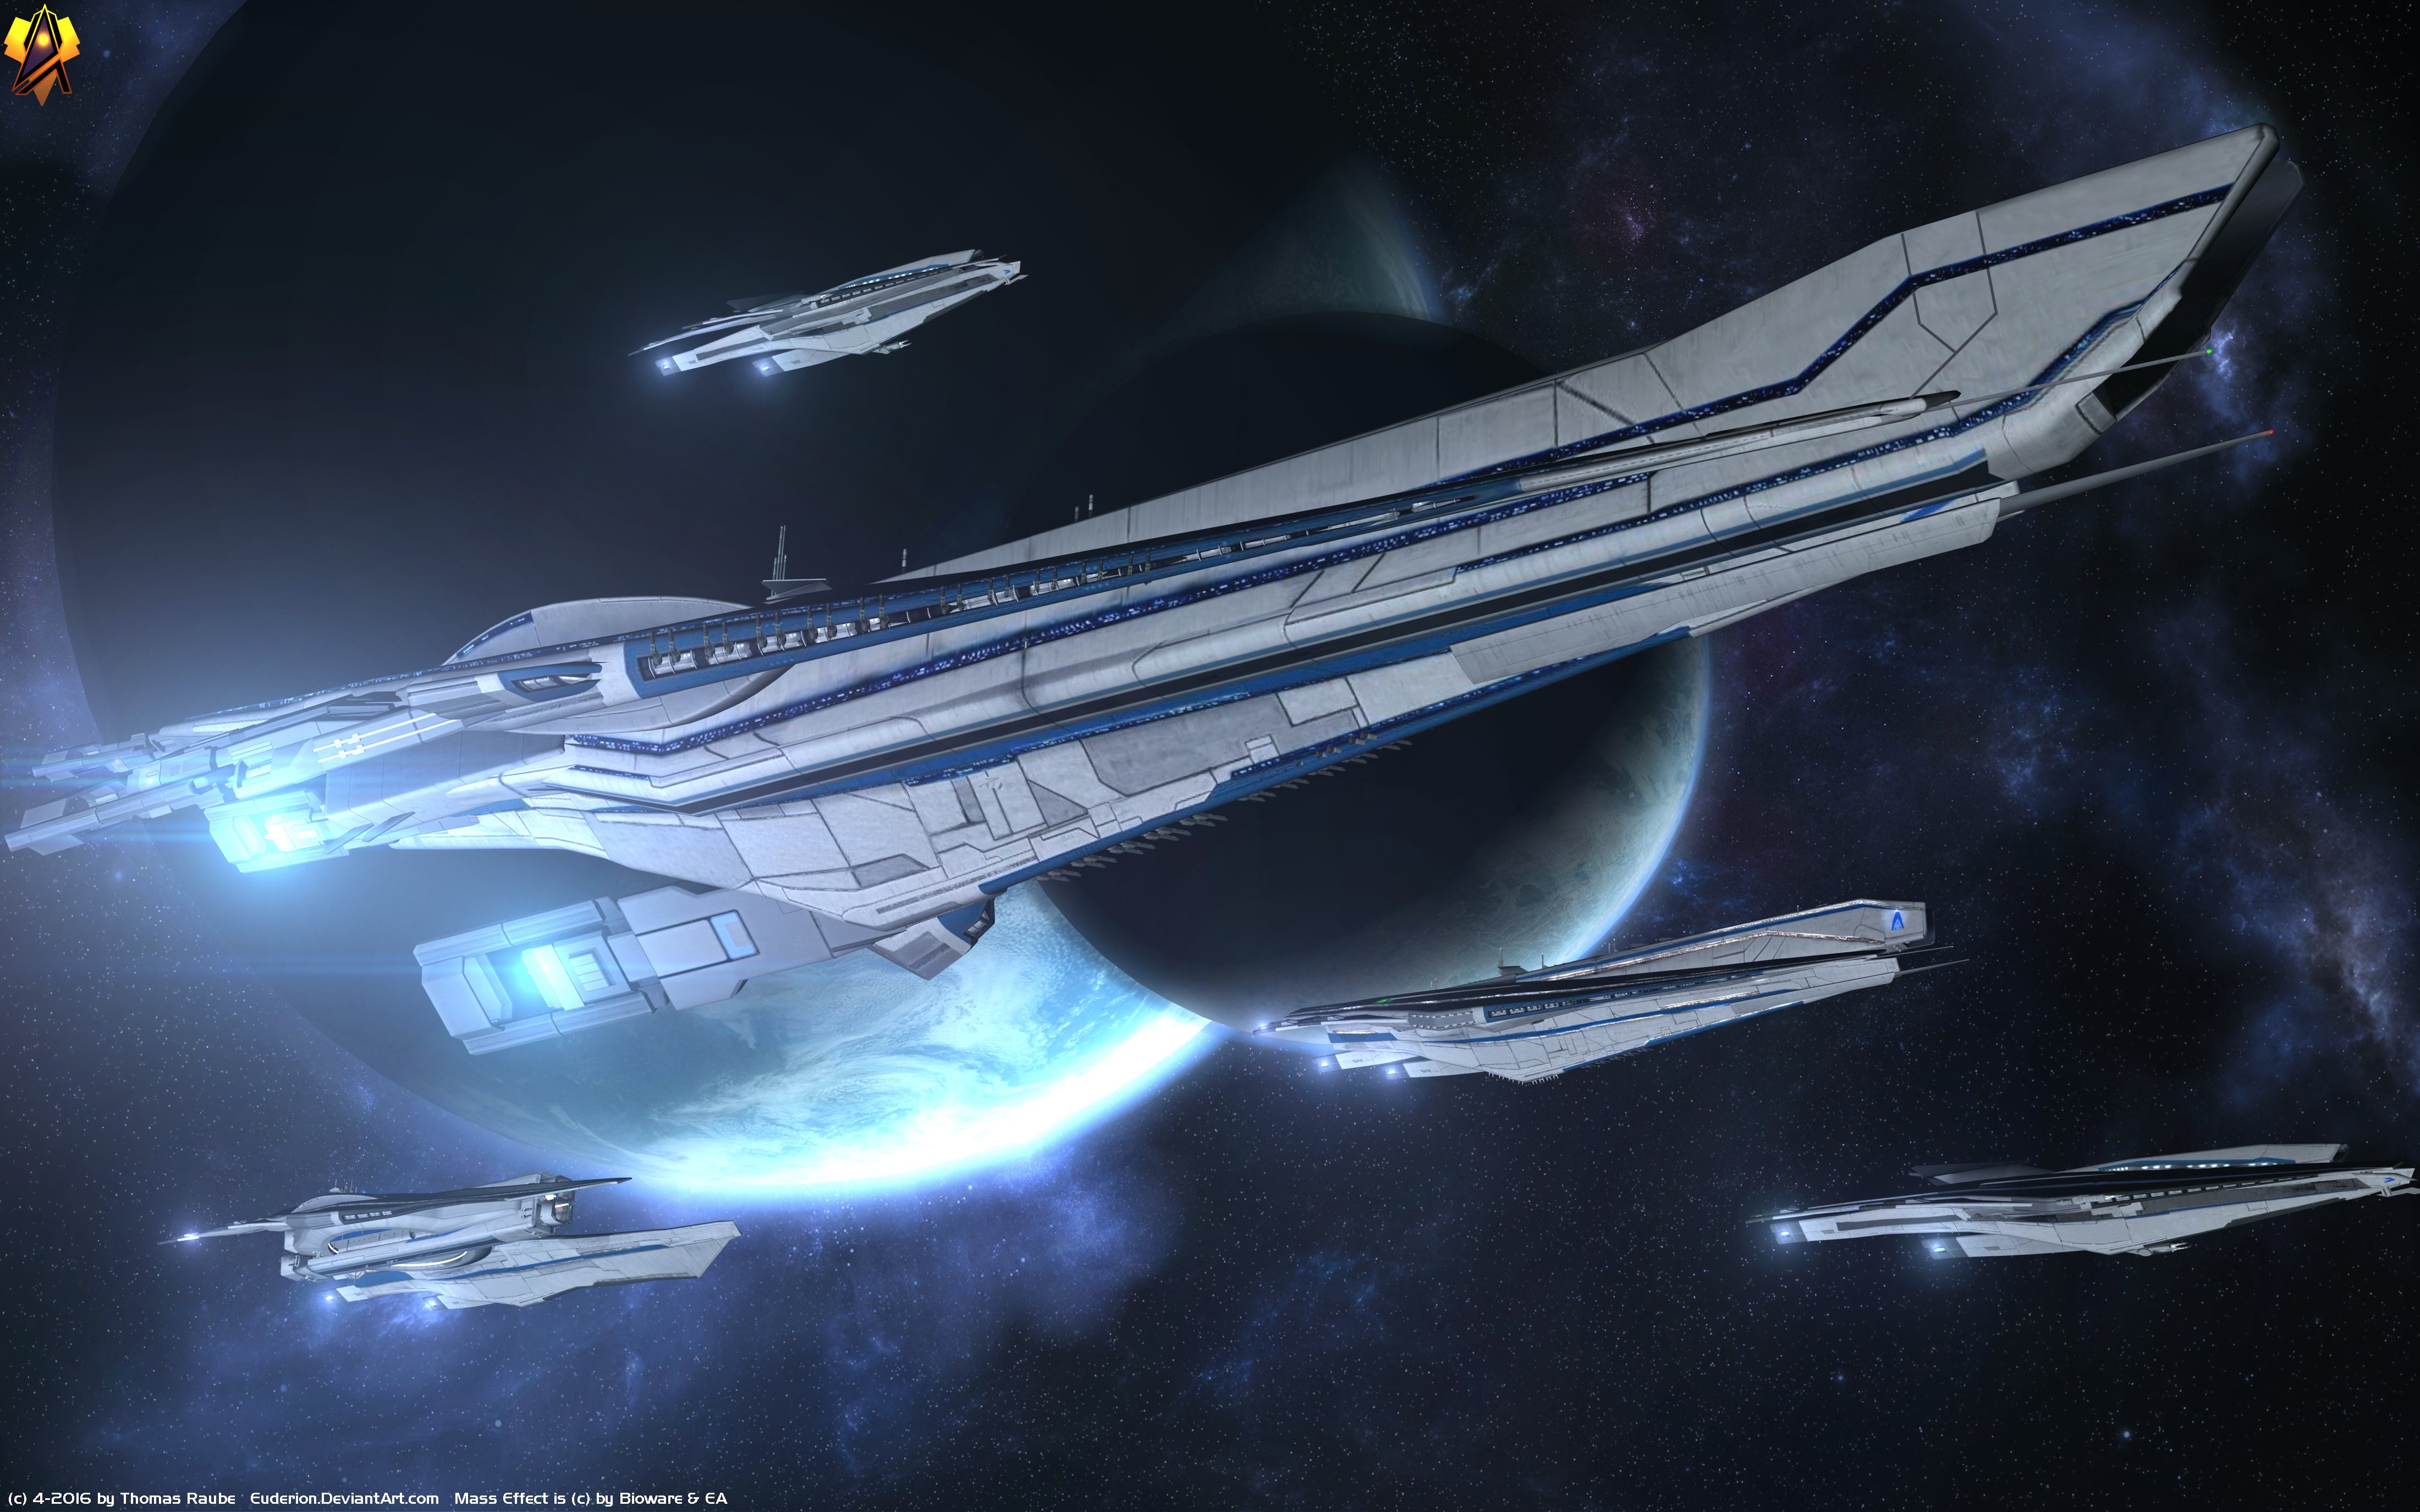 Mass Effect Spaceship Starship Systems Alliance 4400x2750